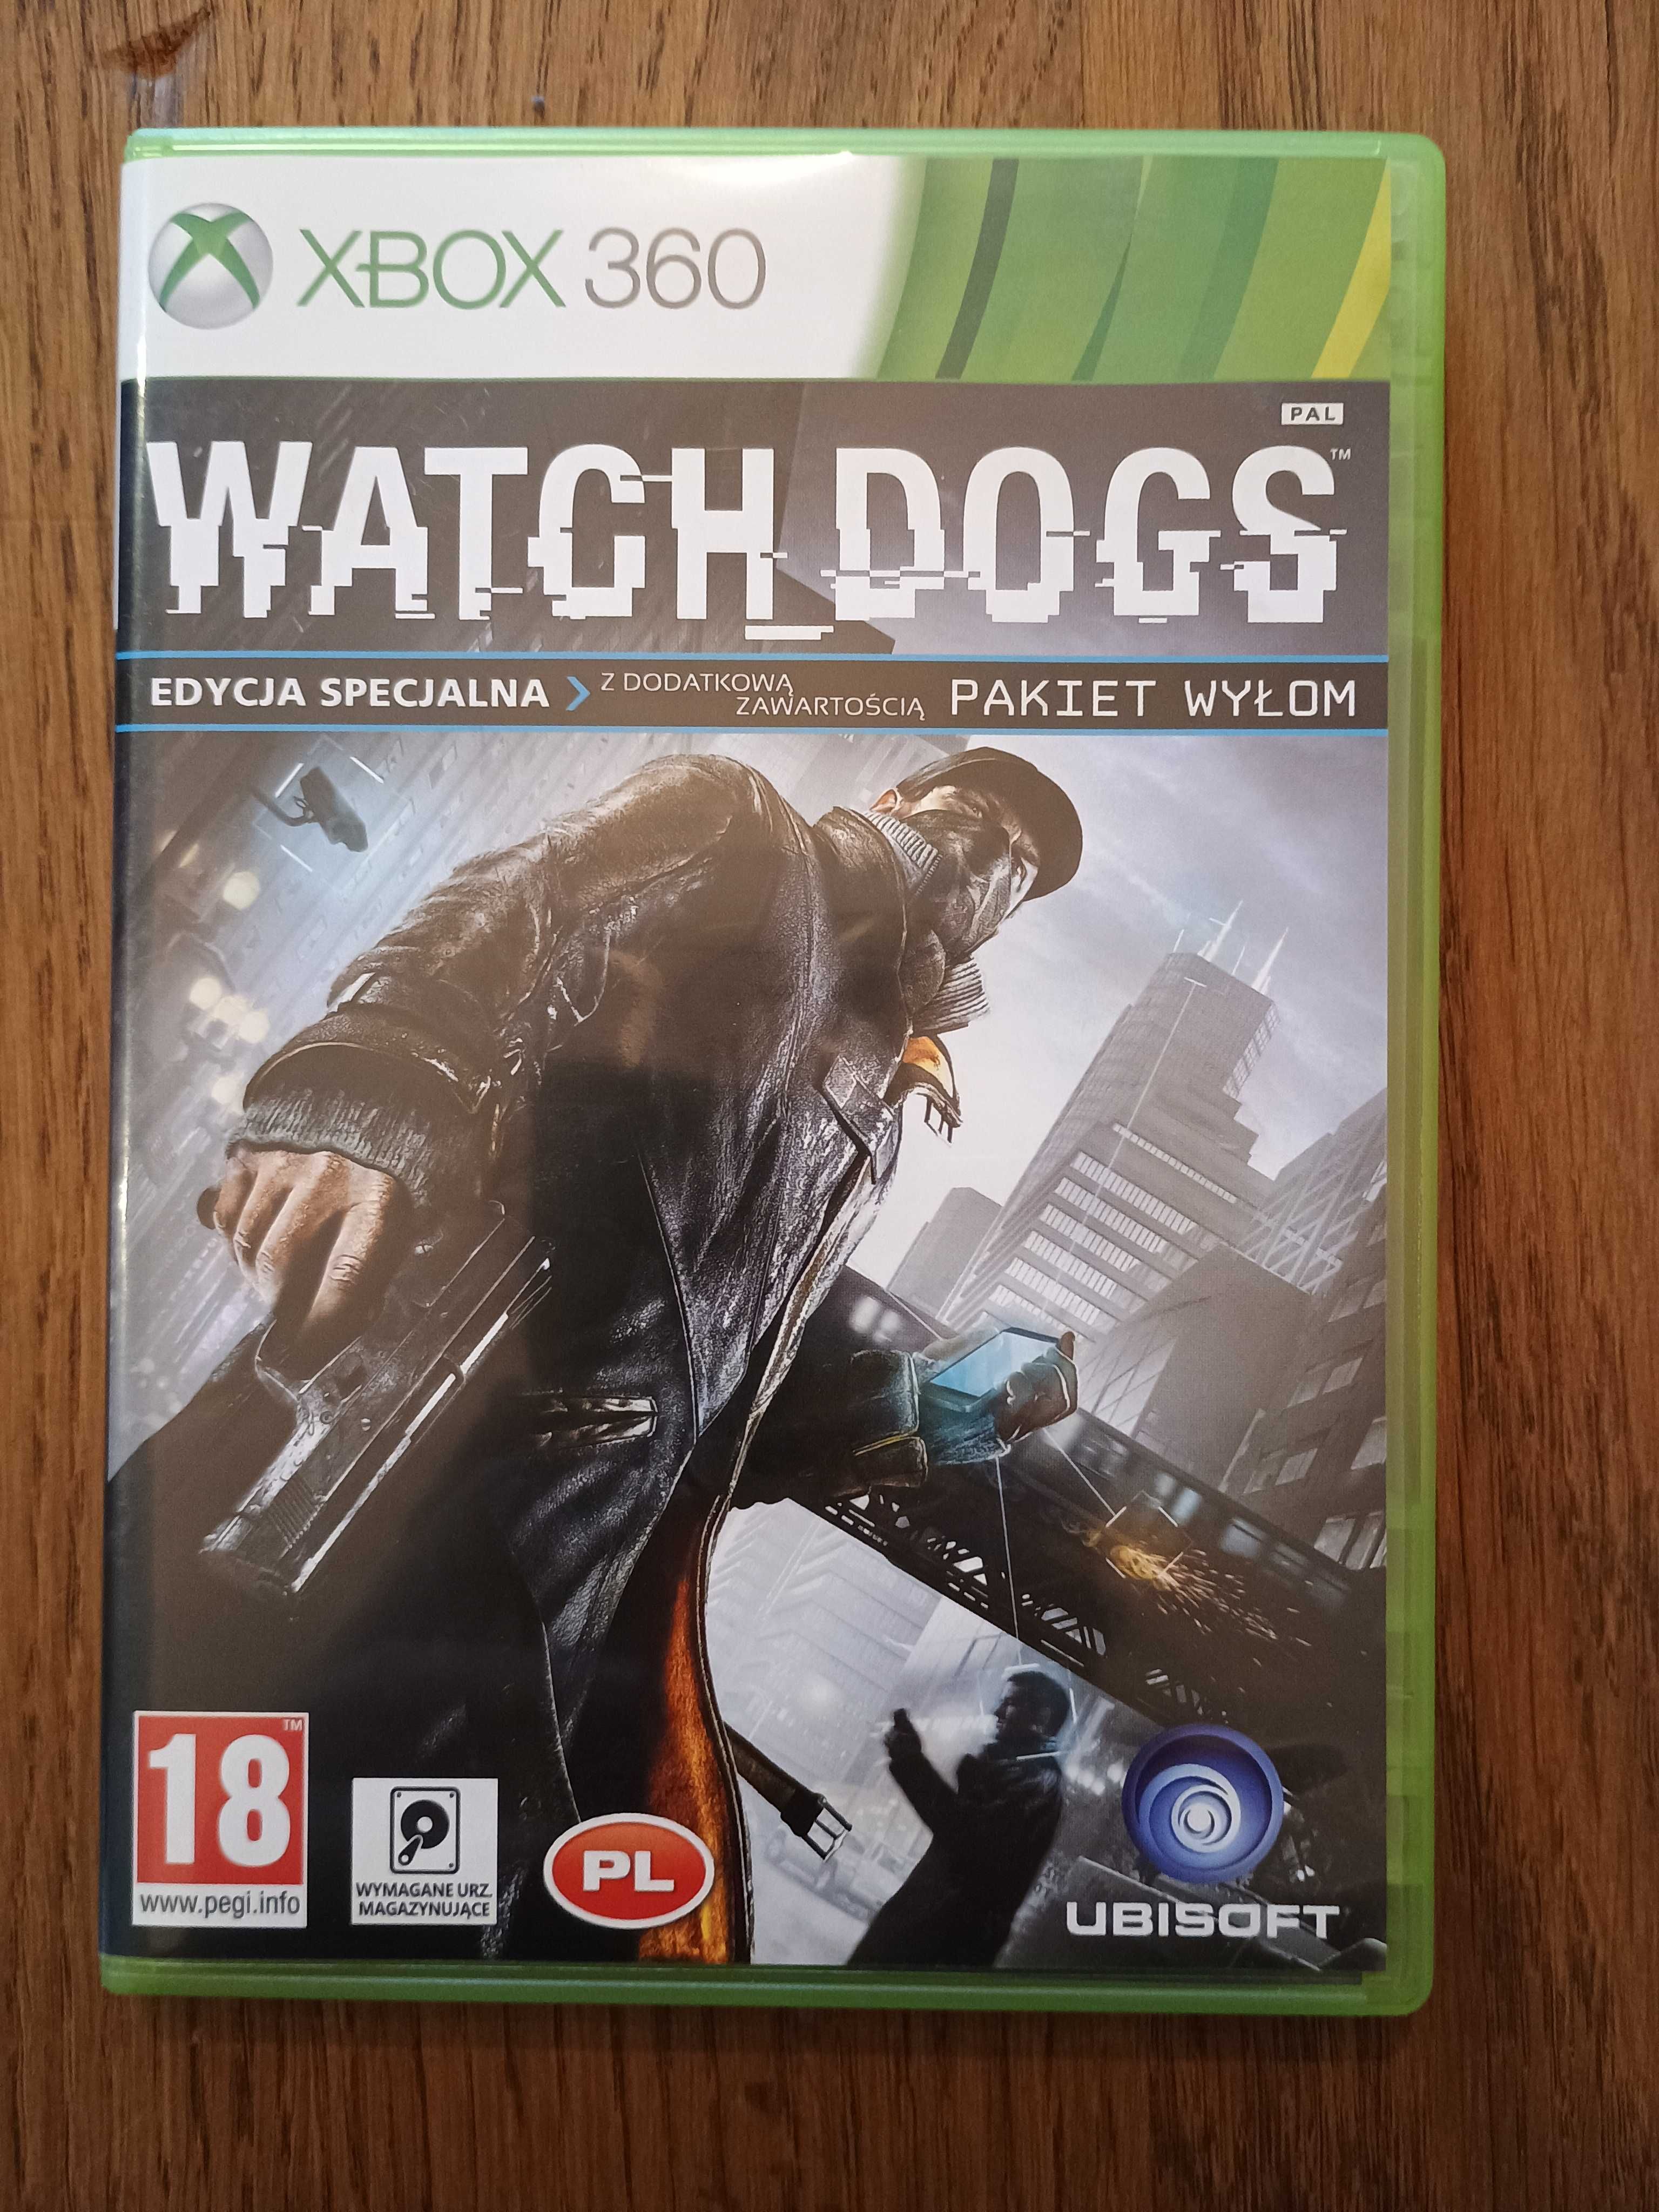 Watchdogs gra na Xbox360 / stan bdb